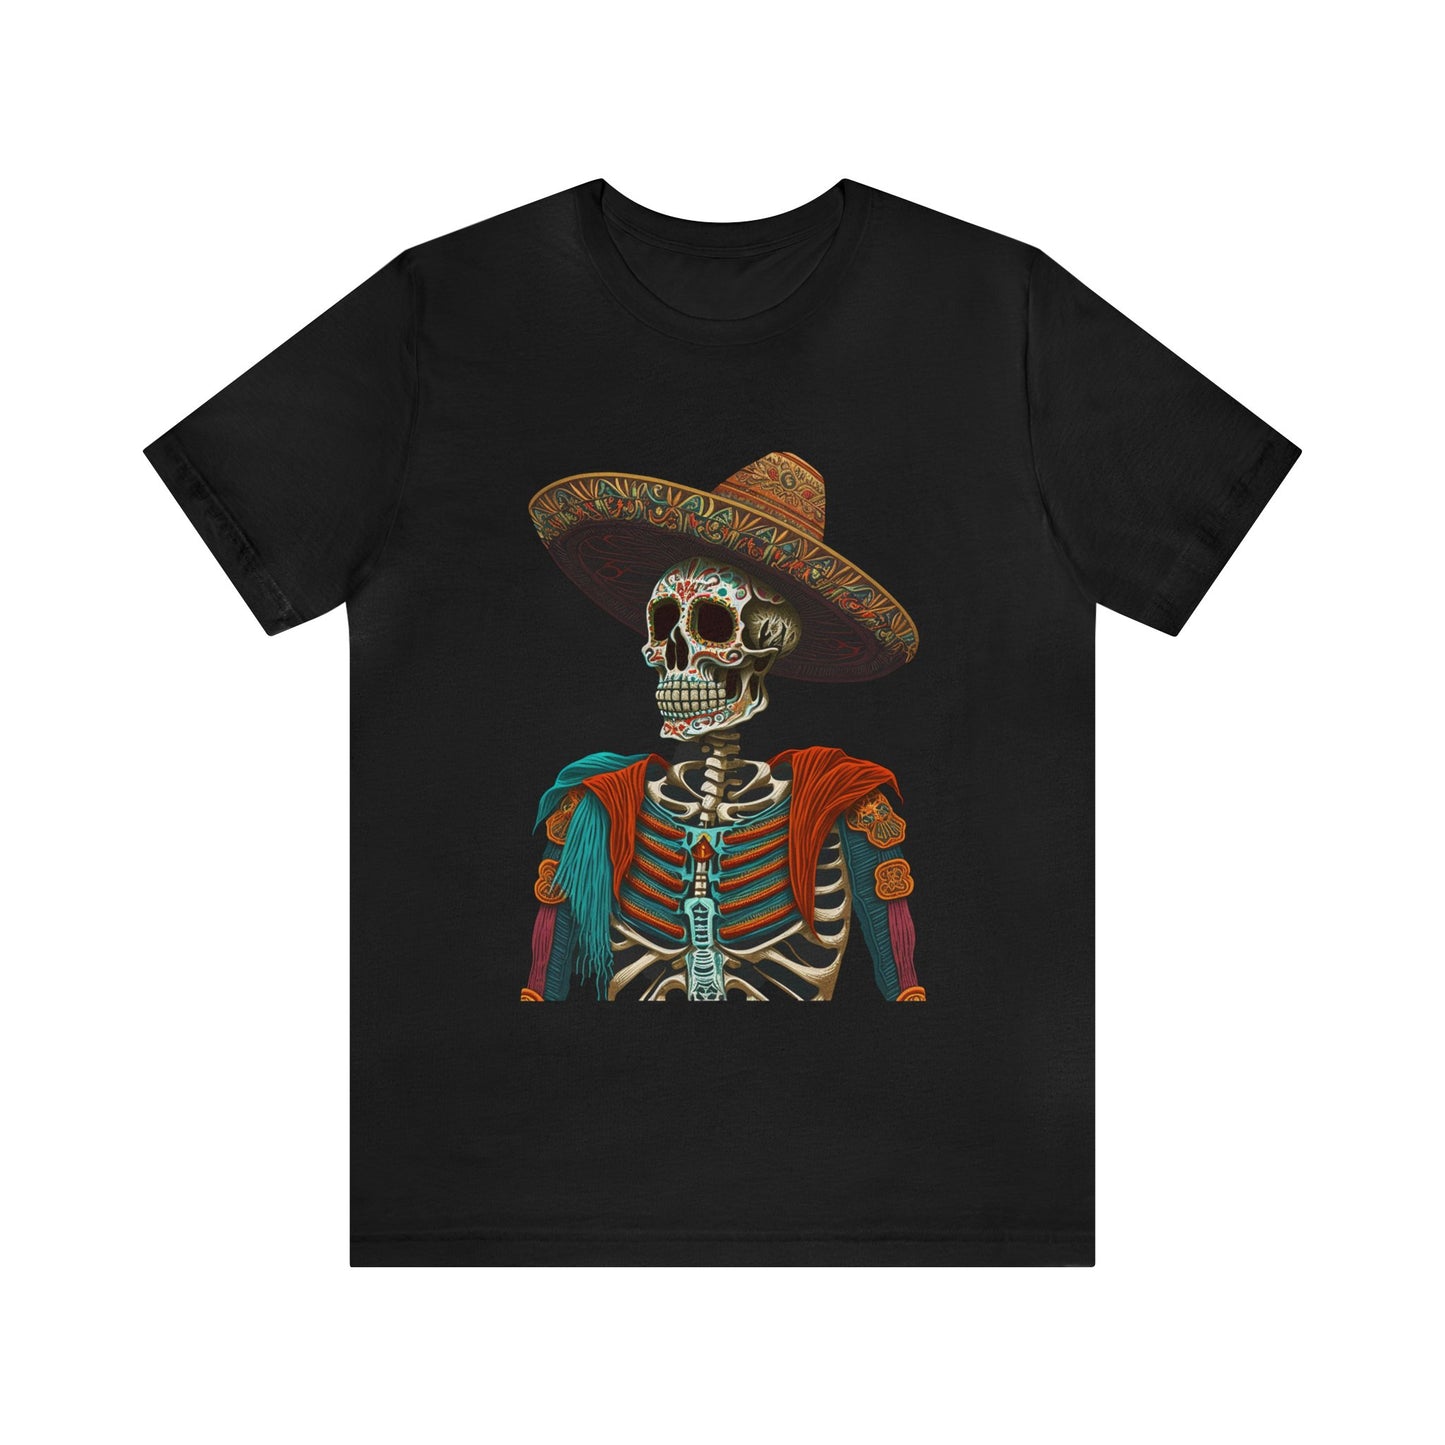 Caballero Musico Skeleton Day of the Dead T Shirt Unisex